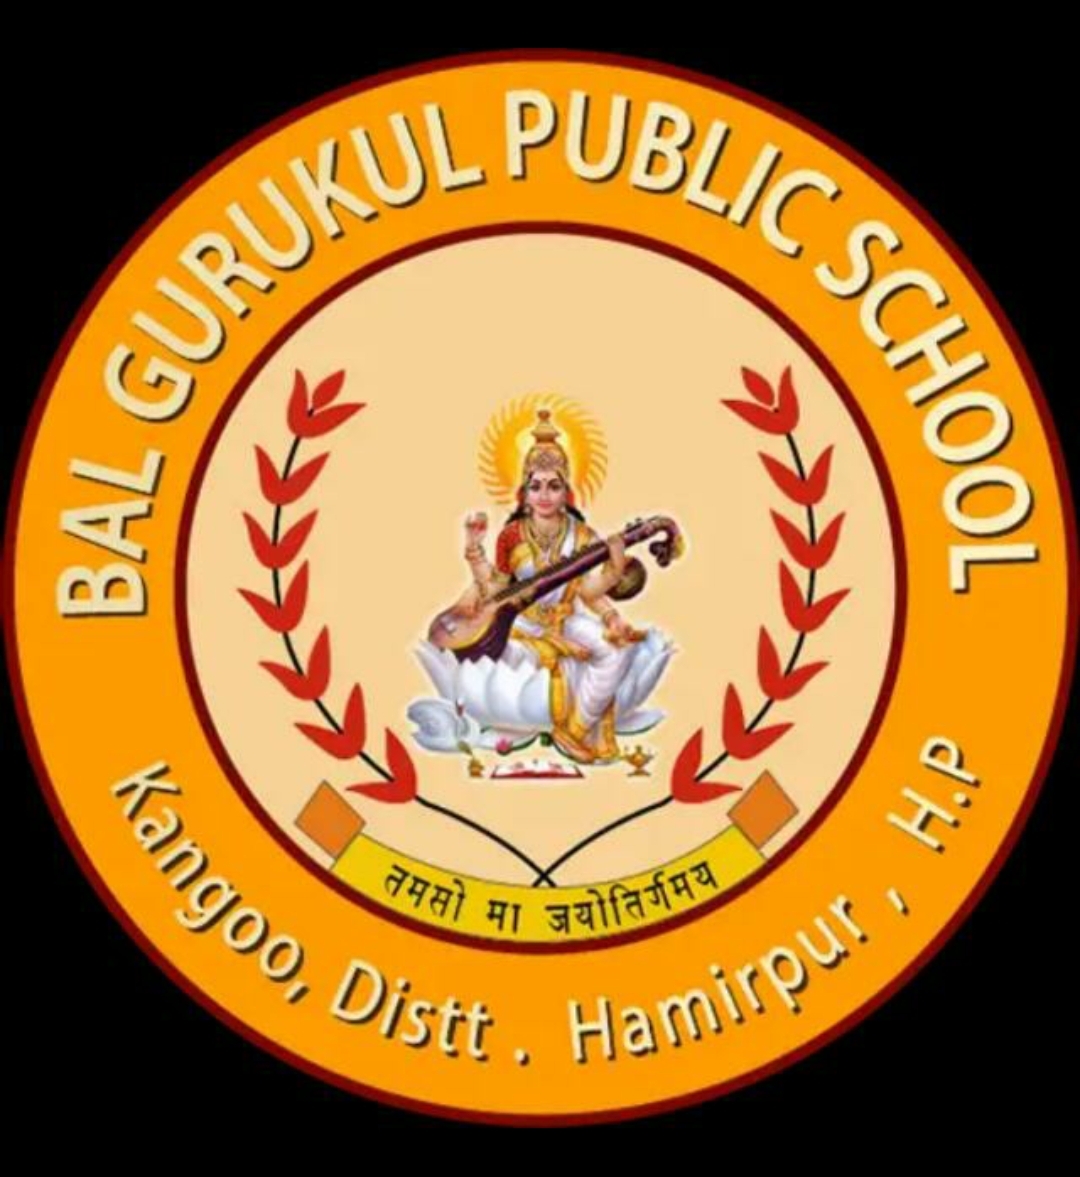 Bal Gurukul Public Sr. Sec. School 